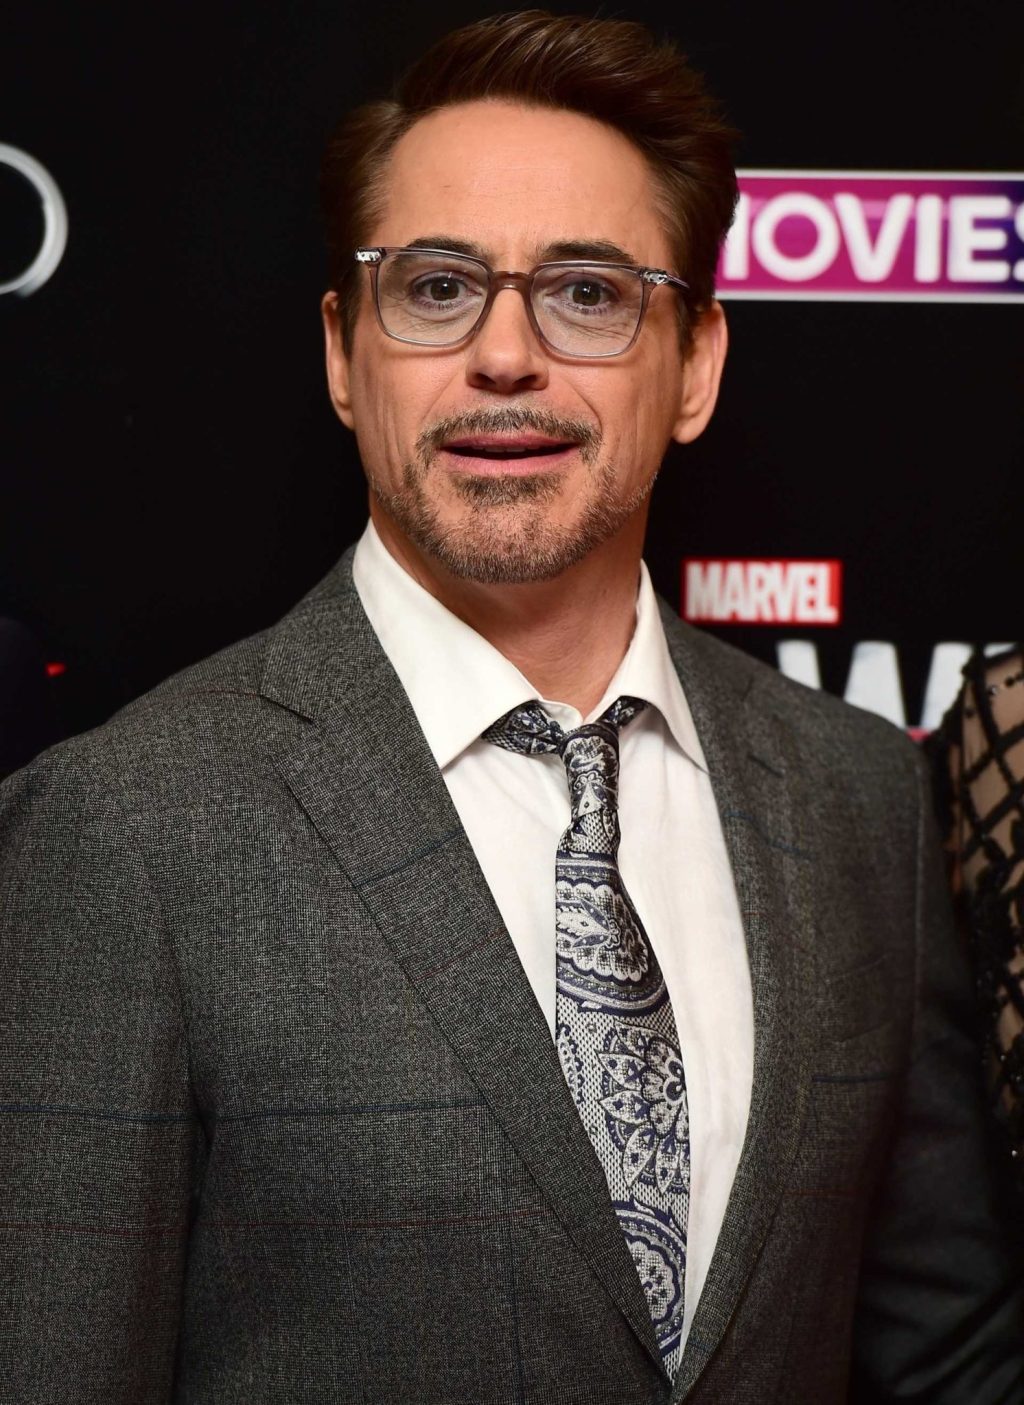 Robert Downey Jr.: From Struggles to Superhero